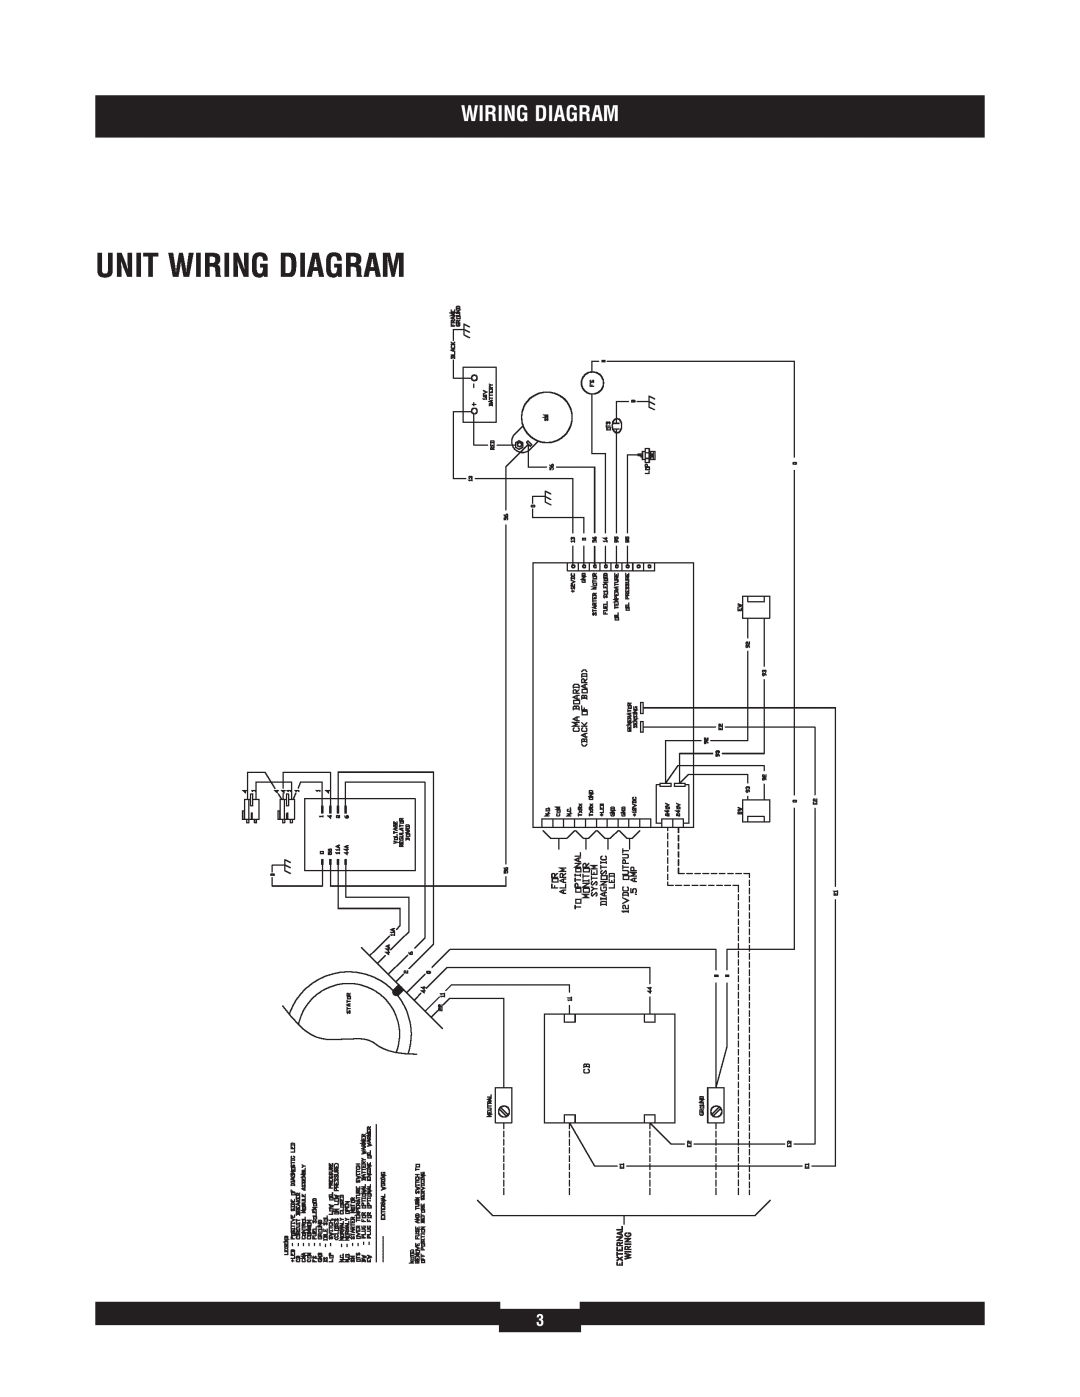 Briggs & Stratton 40211 manual Unit Wiring Diagram 